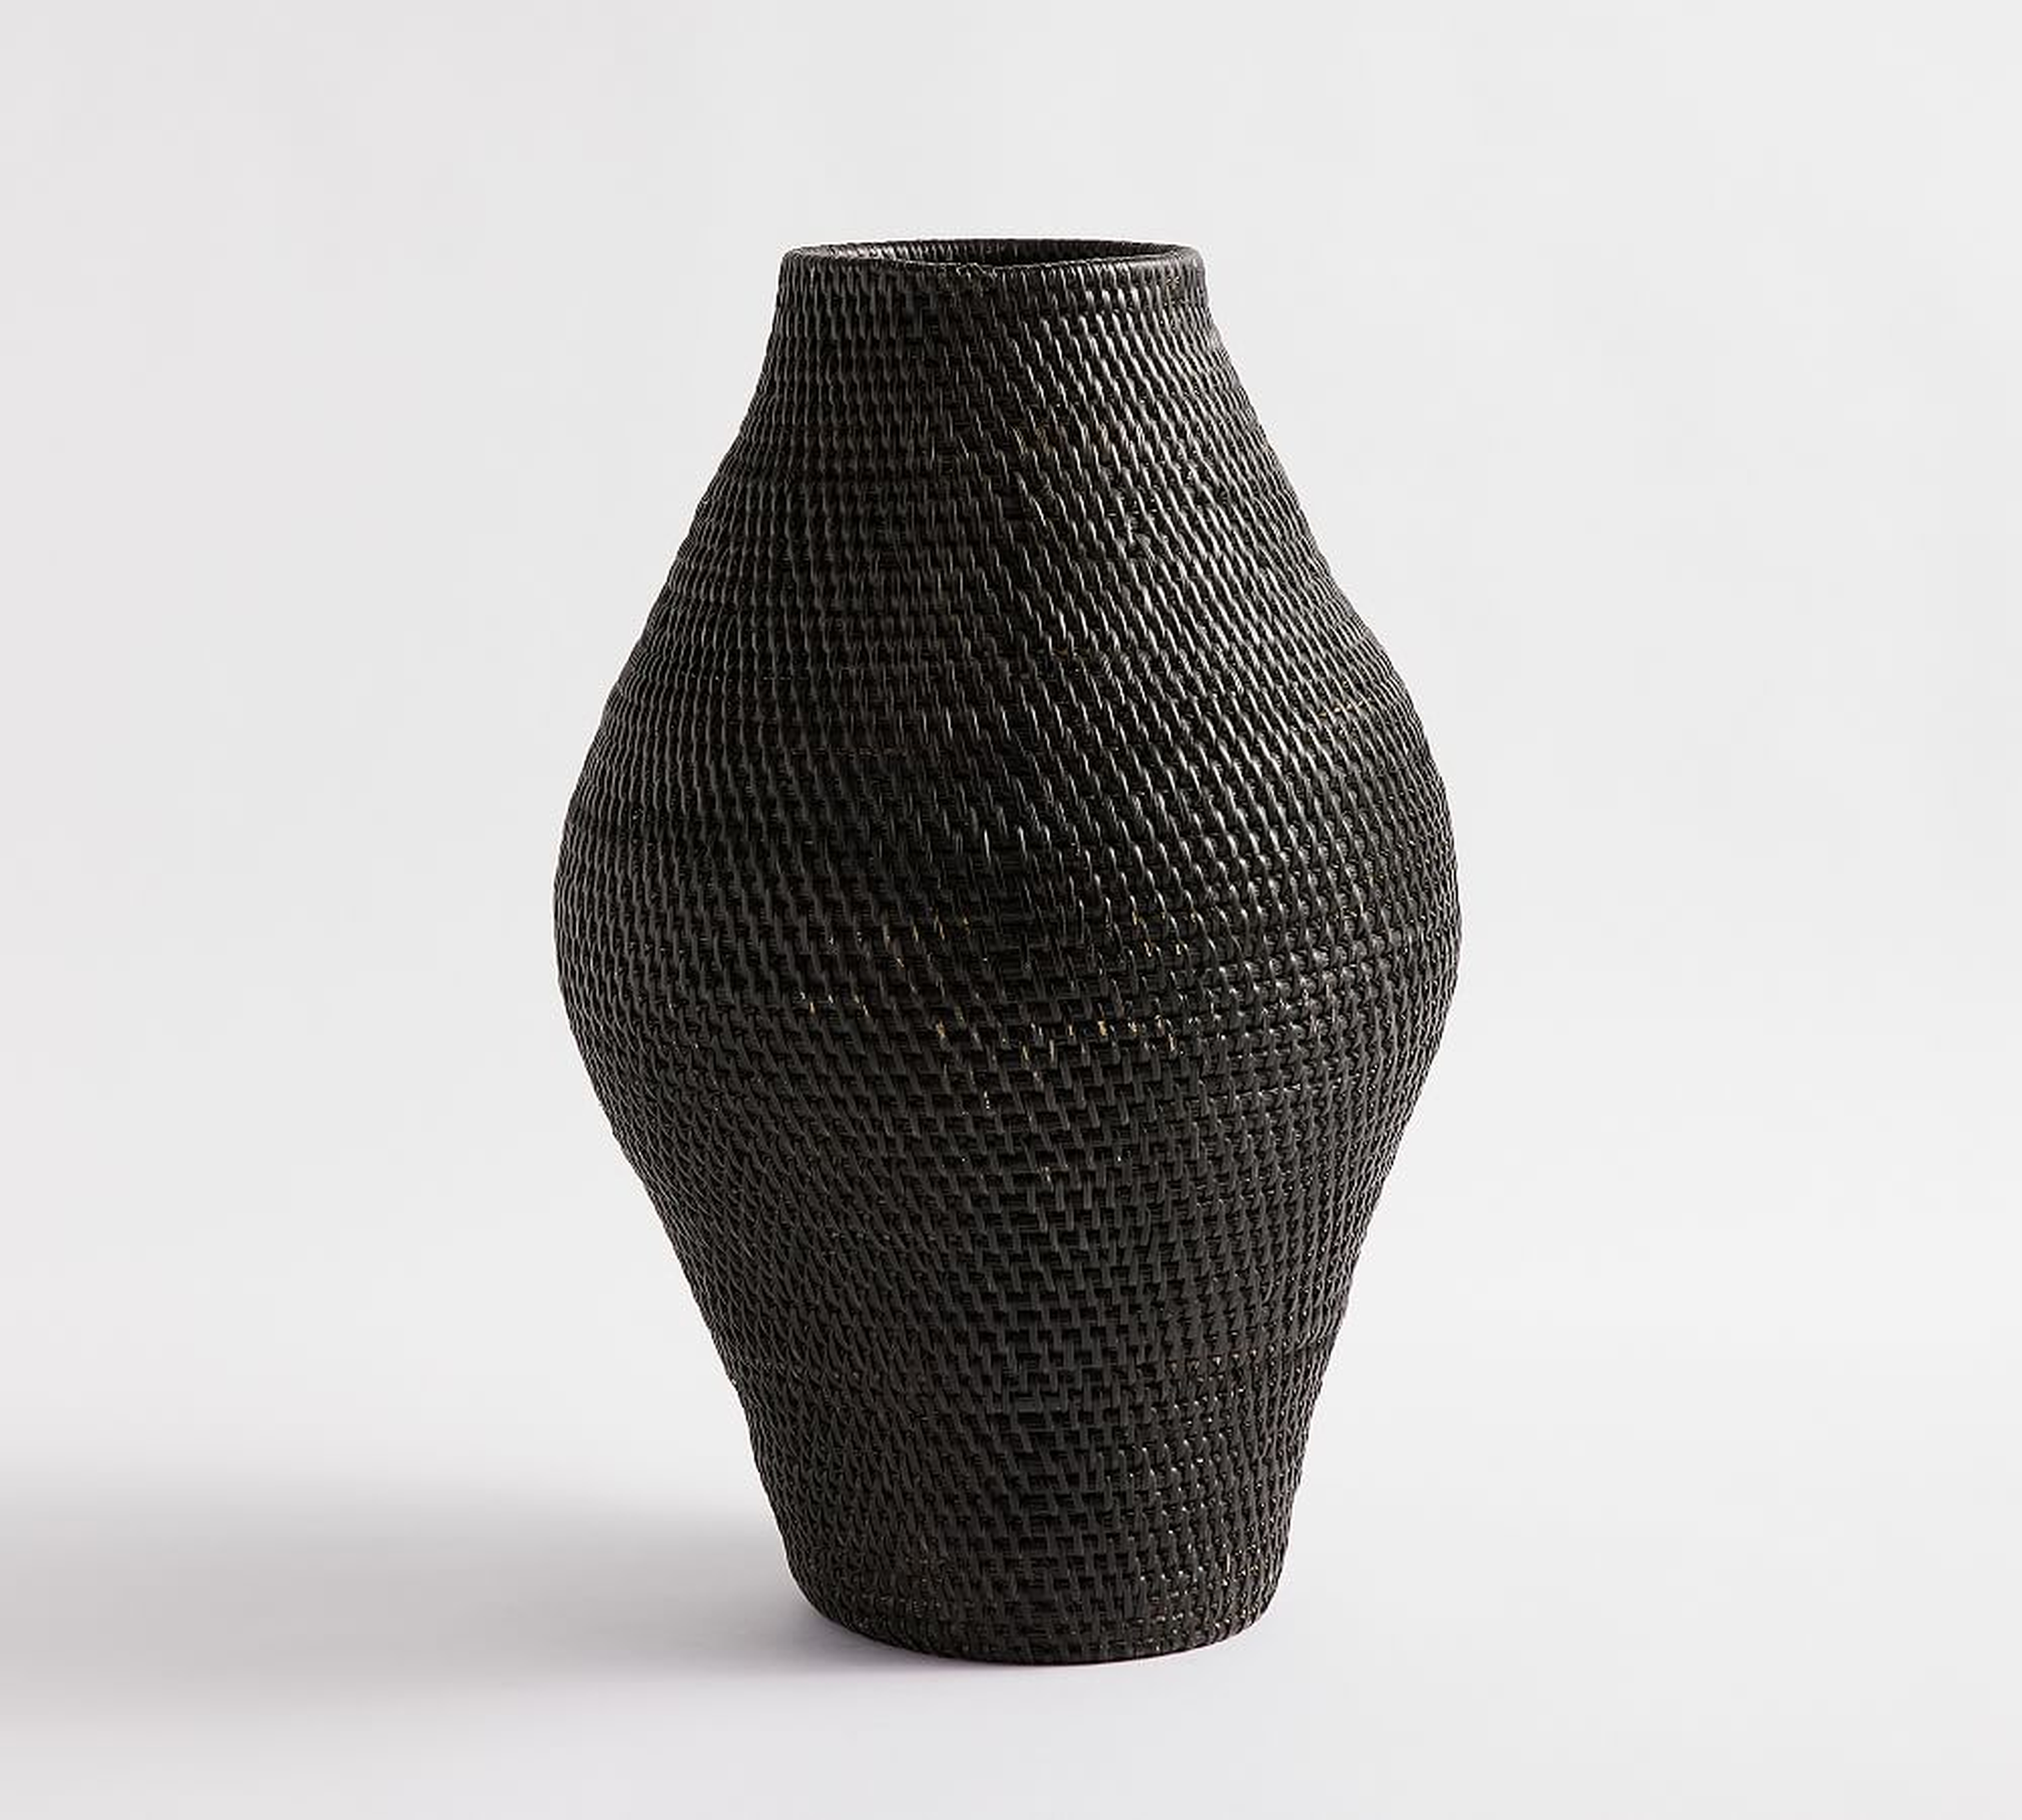 Woven Rattan Vases, Tall, Black - Pottery Barn